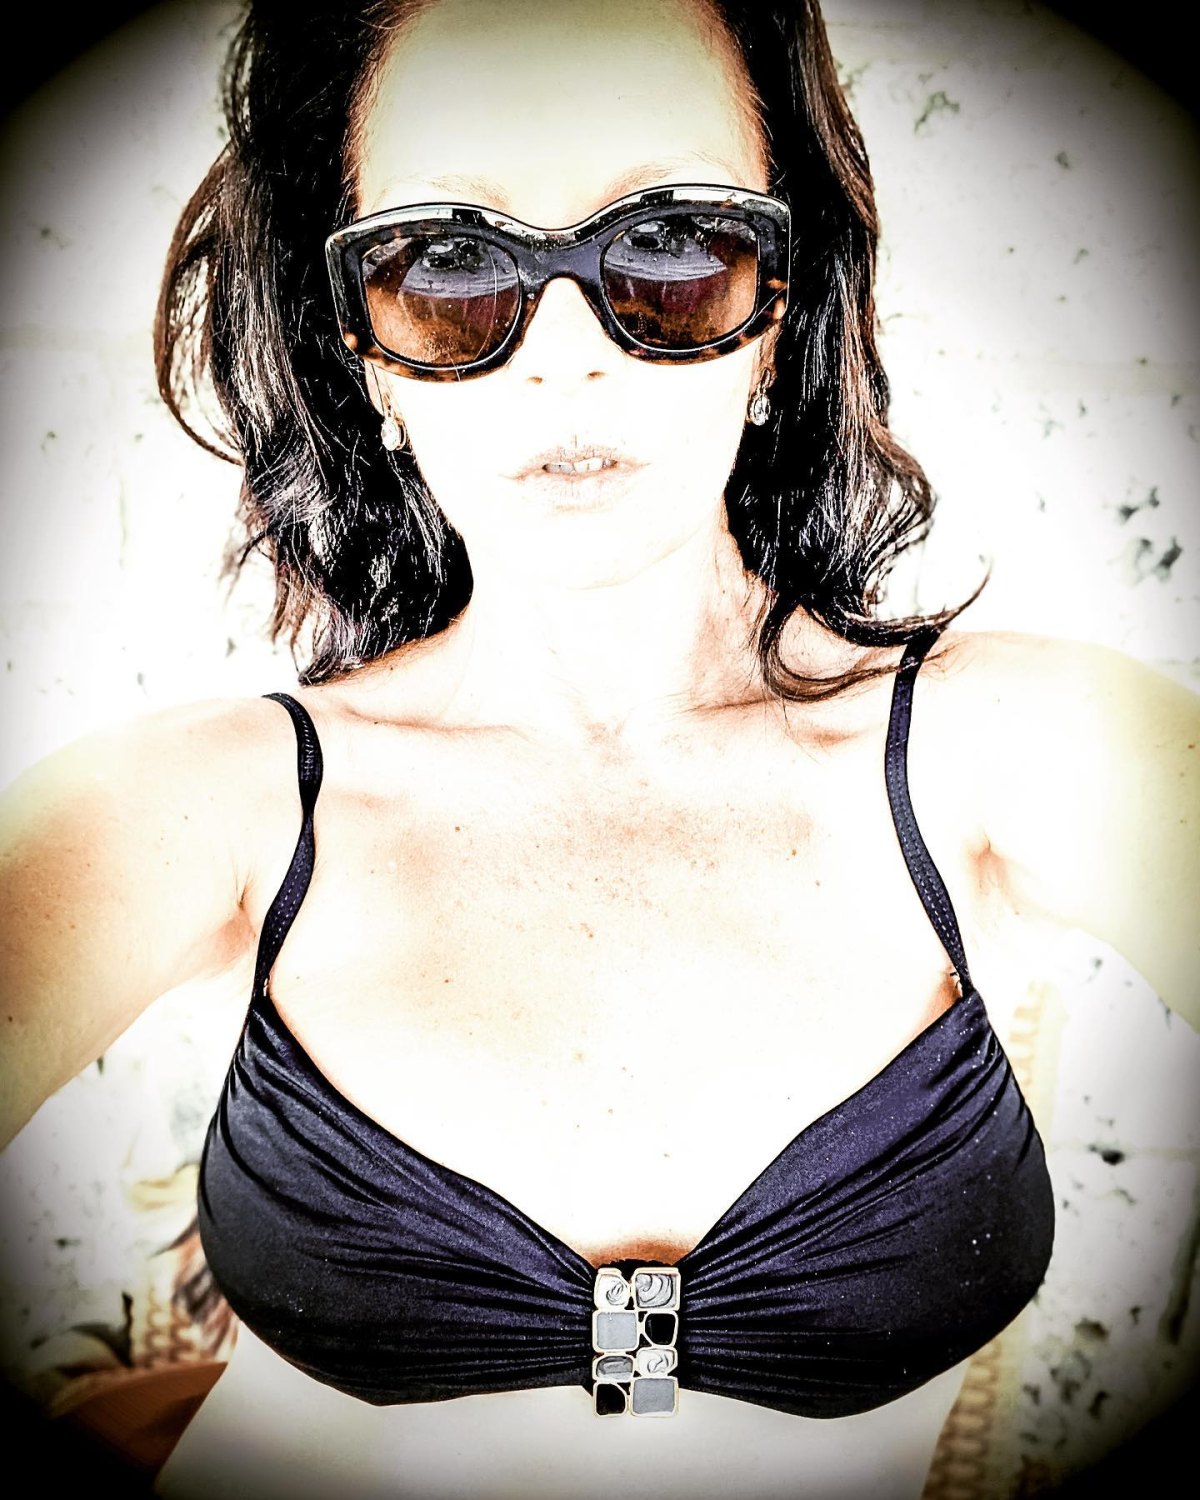 Catherine Zeta-Jones Bikini Photos: Best Swimsuit Pictures